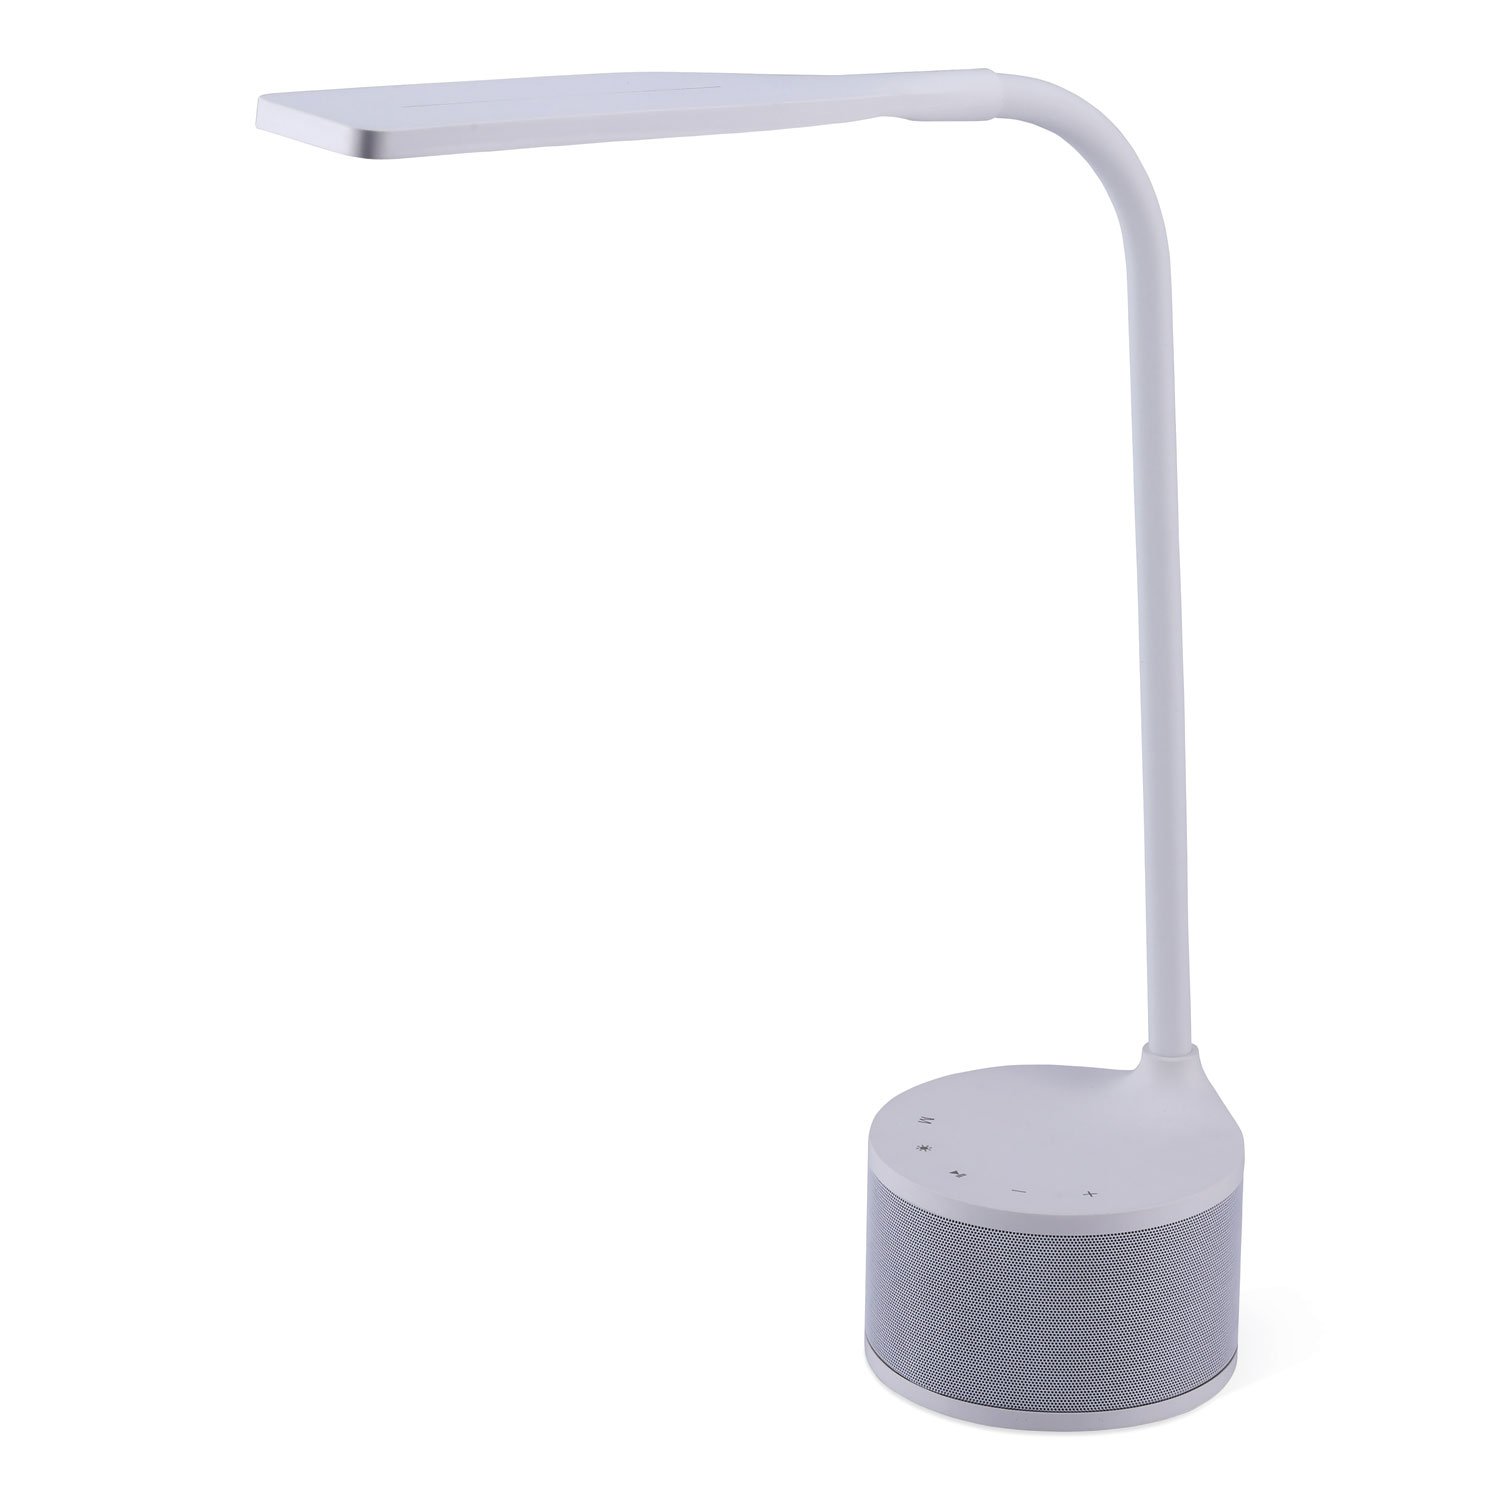  Bostitch VLED1817 LED Bluetooth Speaker Lamp with USB, 2 Prong, 4.33w x 14.57h, White (BOSVLED1817) 